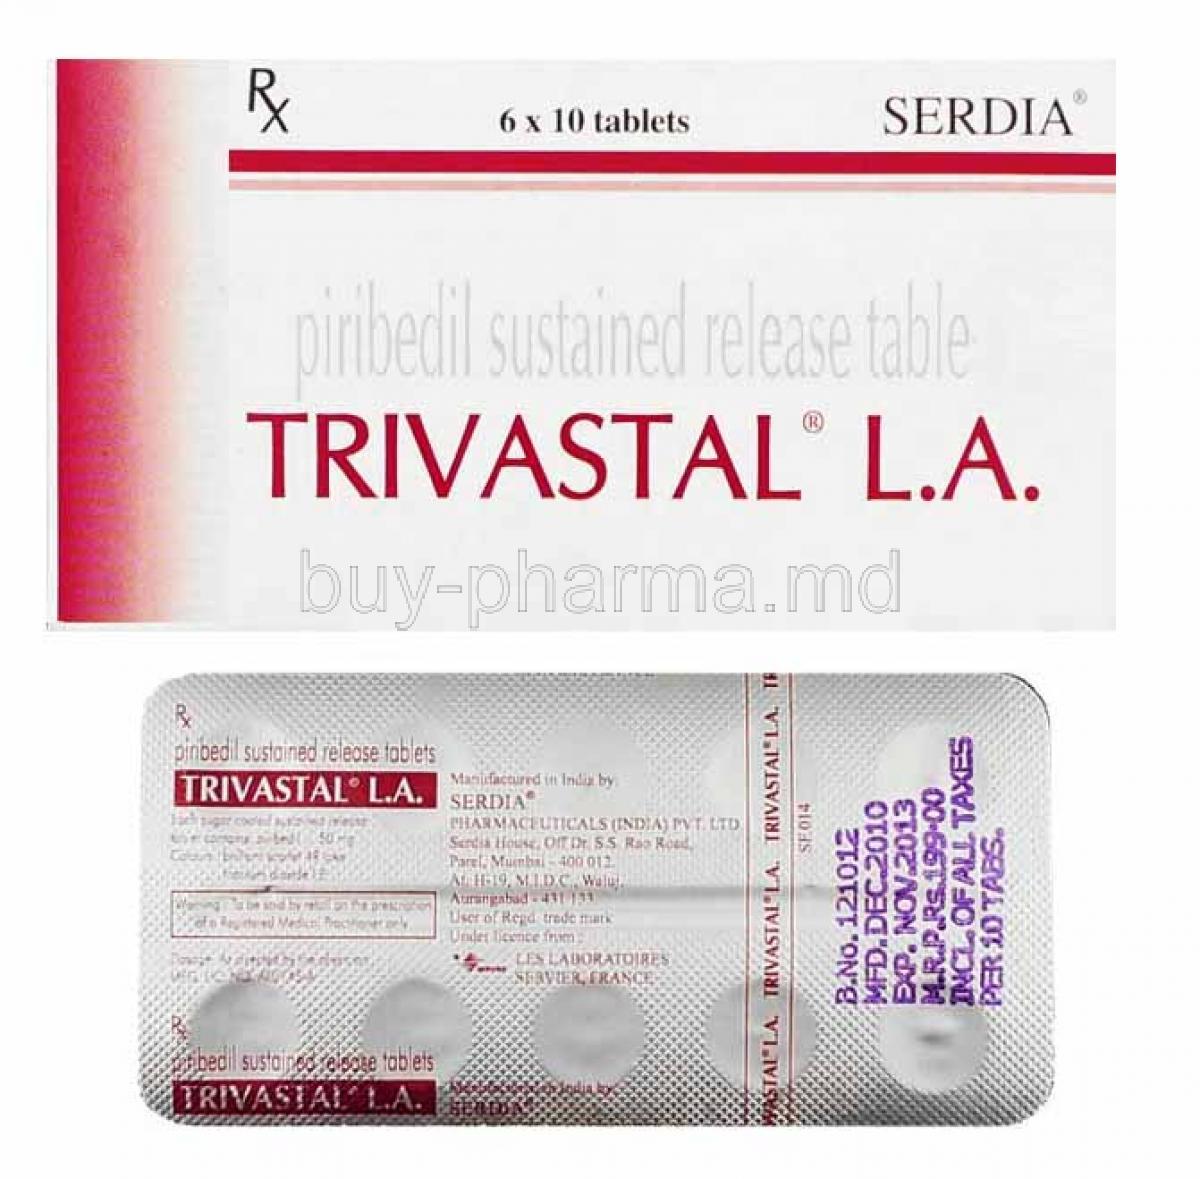 Trivastal LA, Piribedil box and tablets